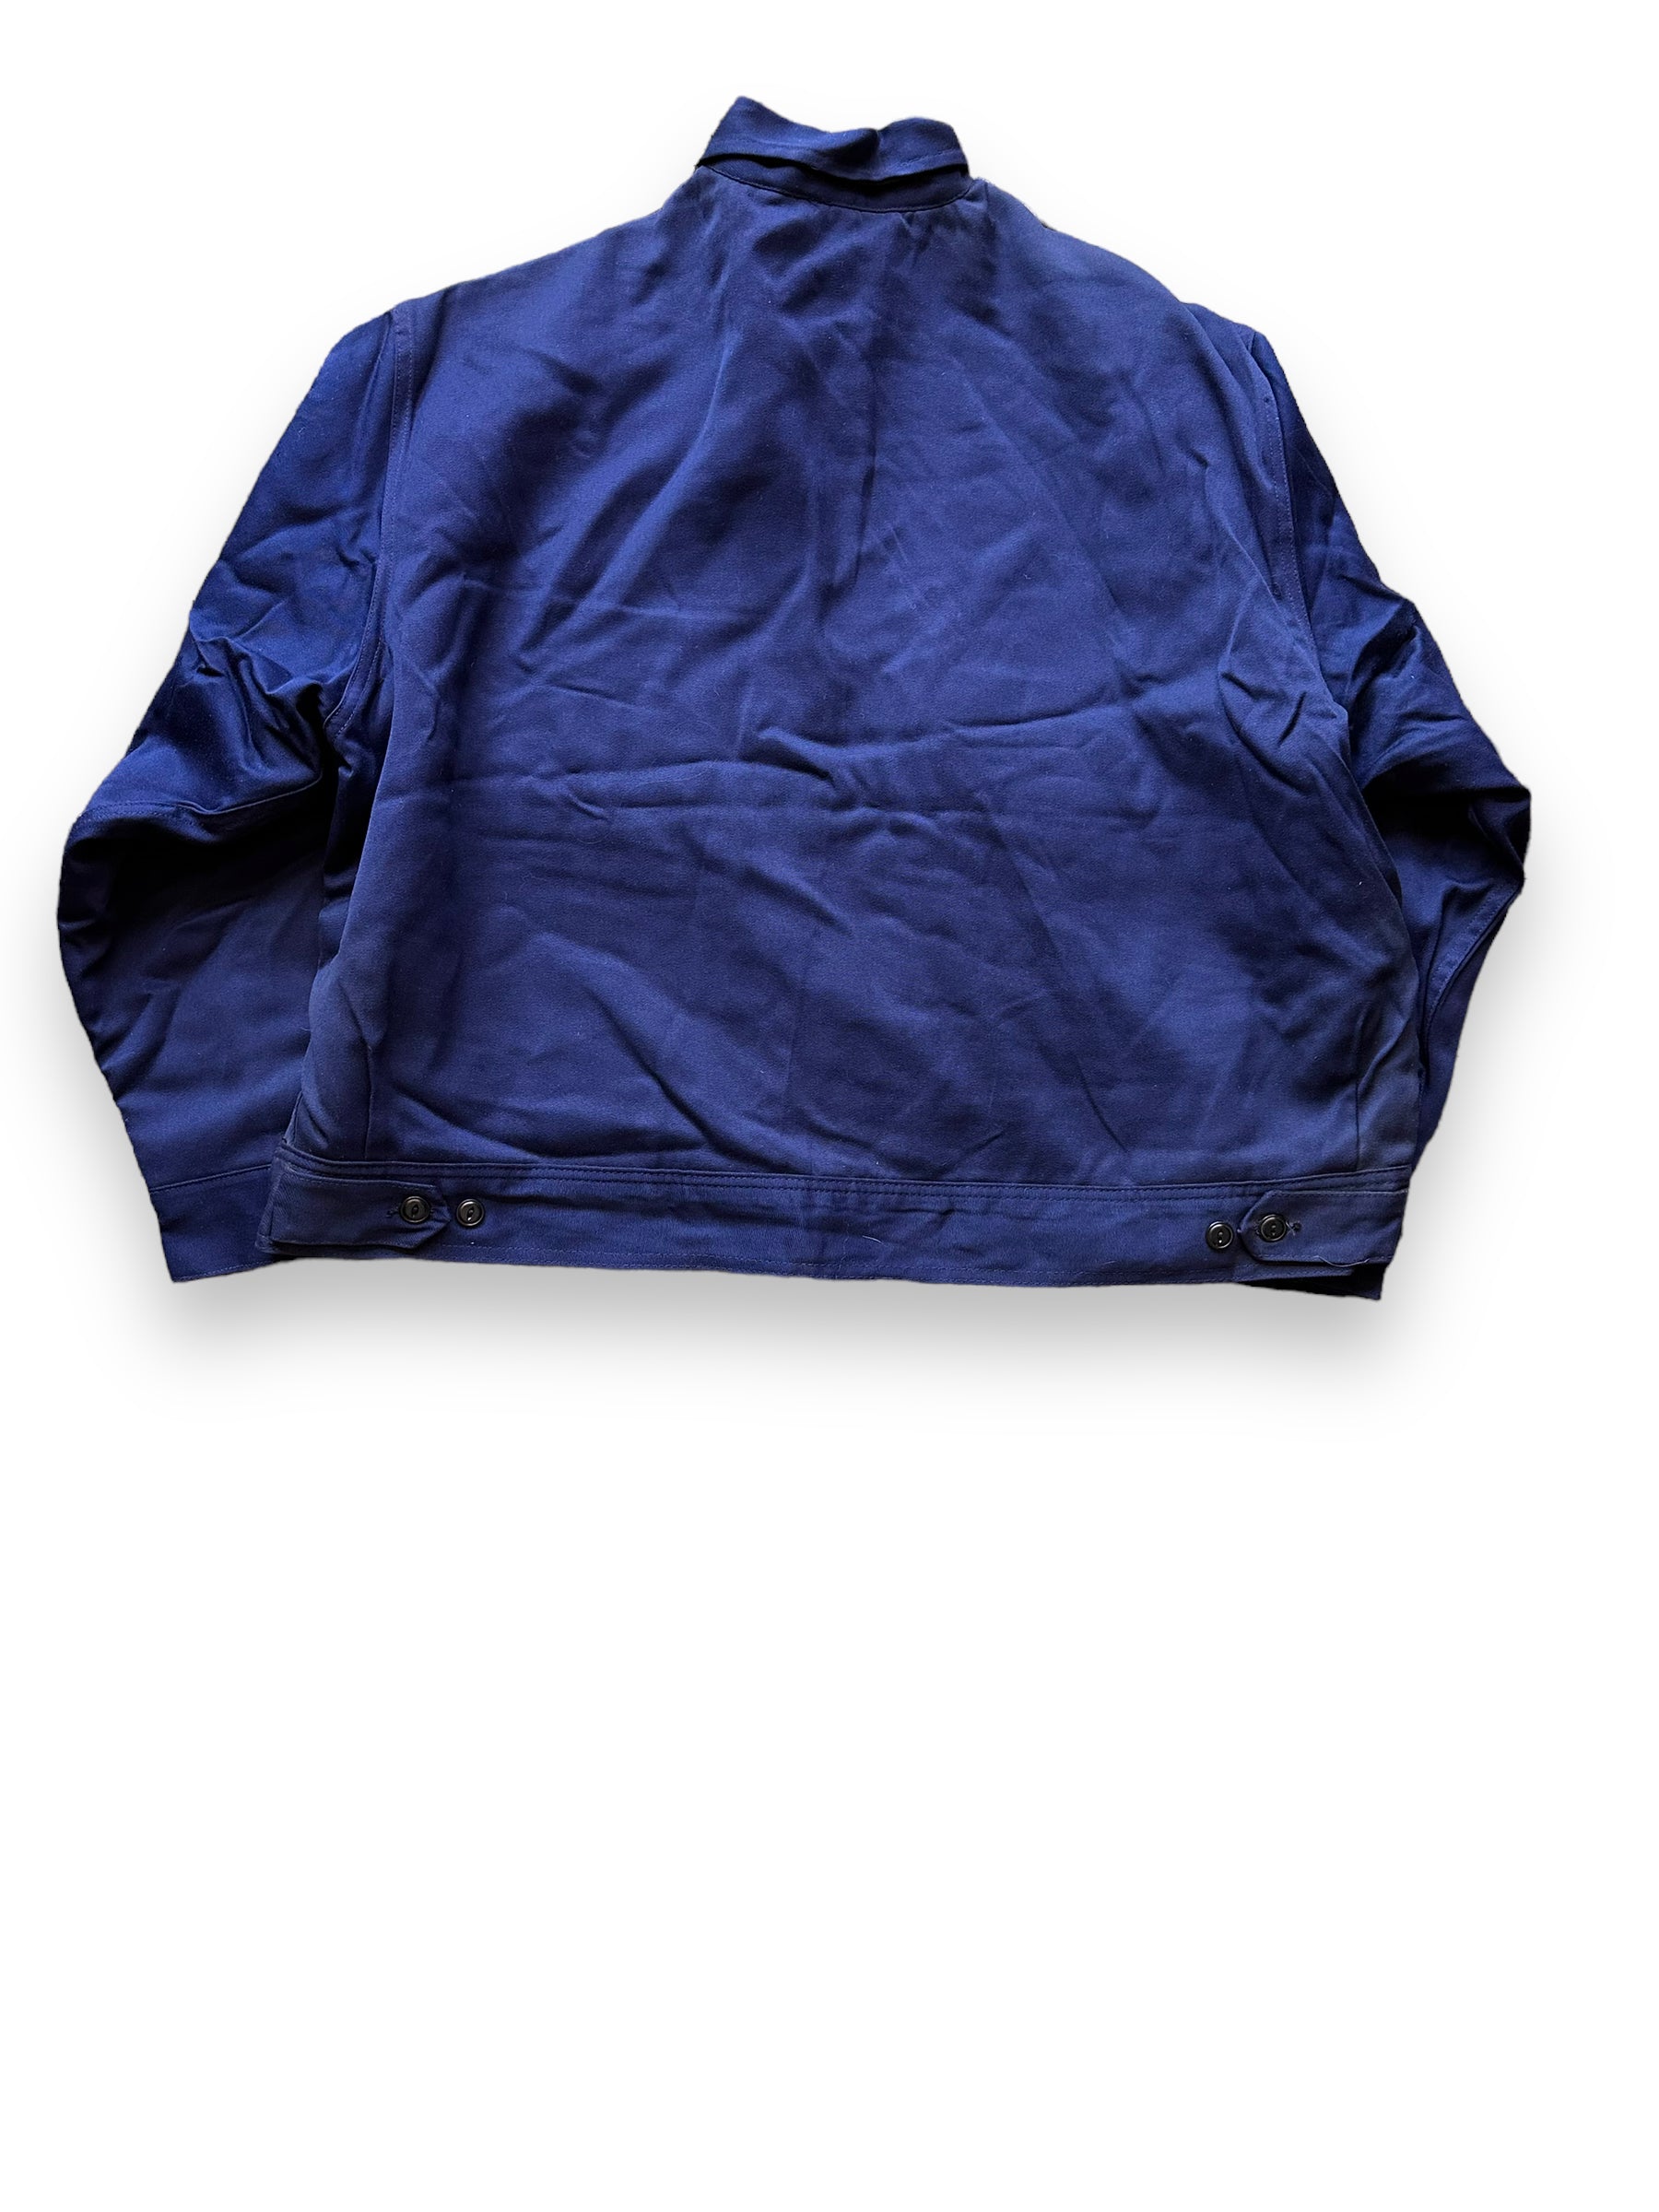 Rear View of Vintage Blue Troy Blanket Lined Gas Station Jacket SZ 54 | Vintage Workwear Jacket Seattle | Seattle Vintage Clothing